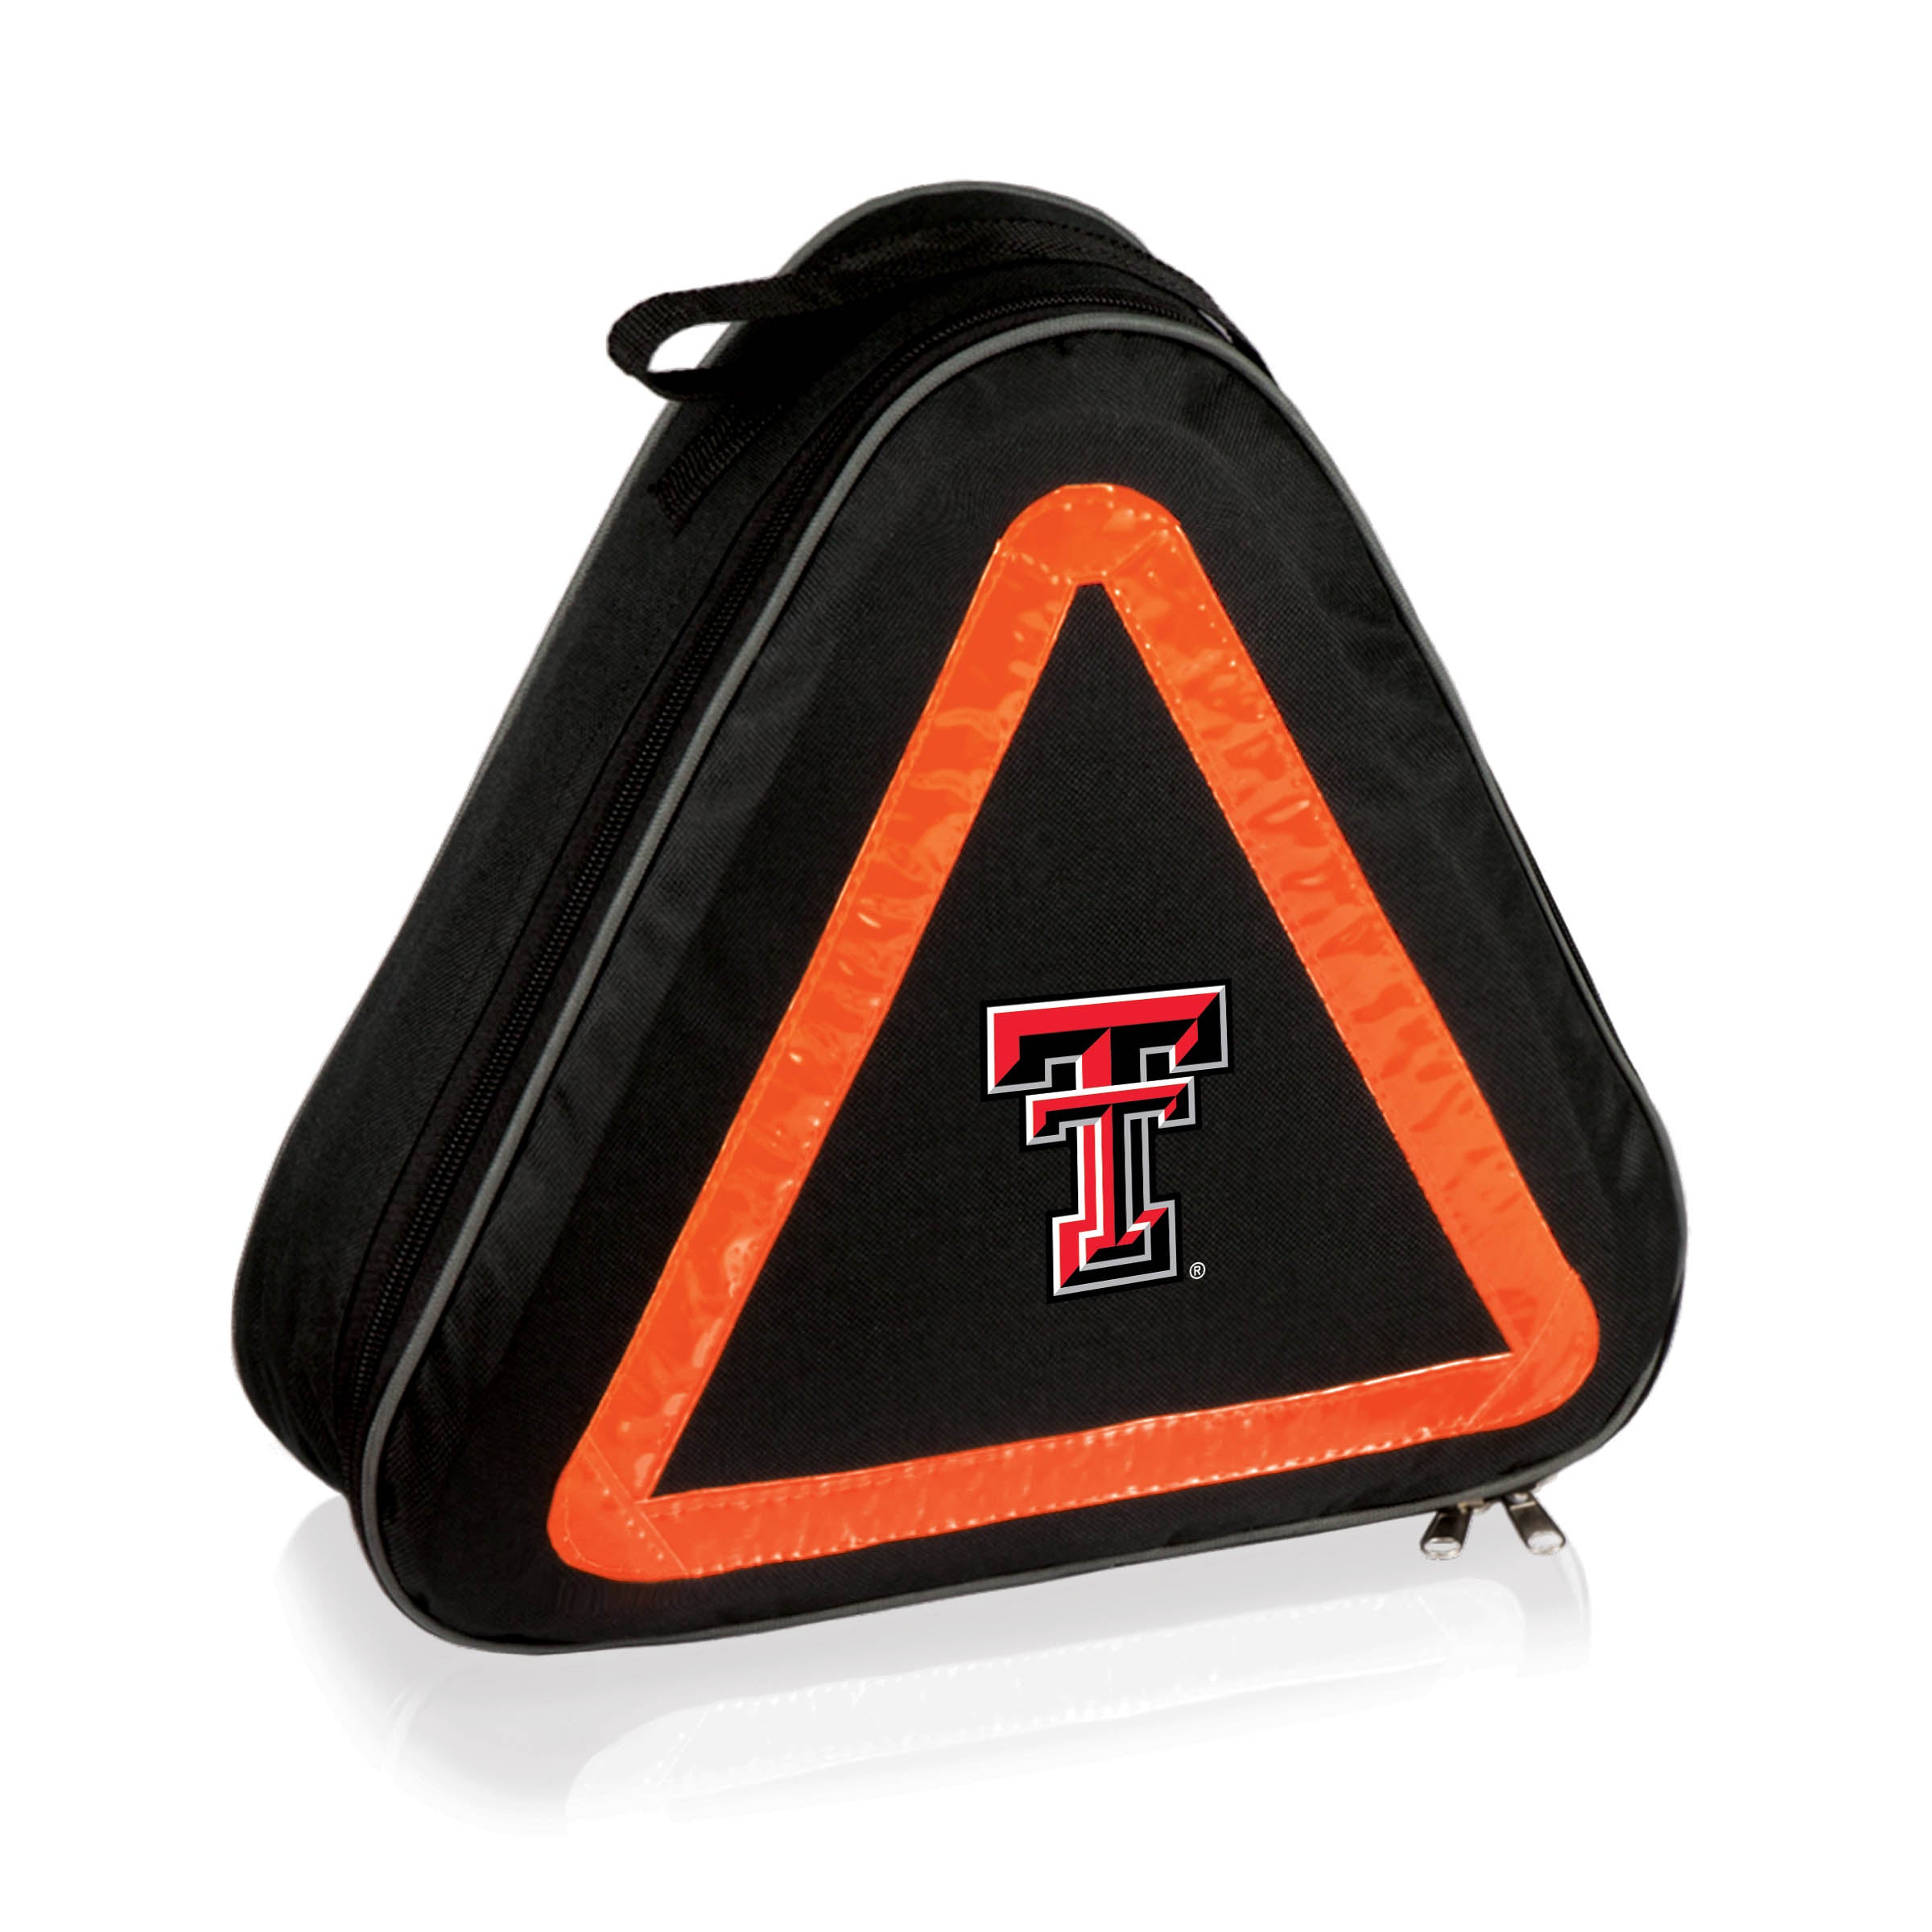 Texas Tech Red Raiders - Roadside Emergency Car Kit